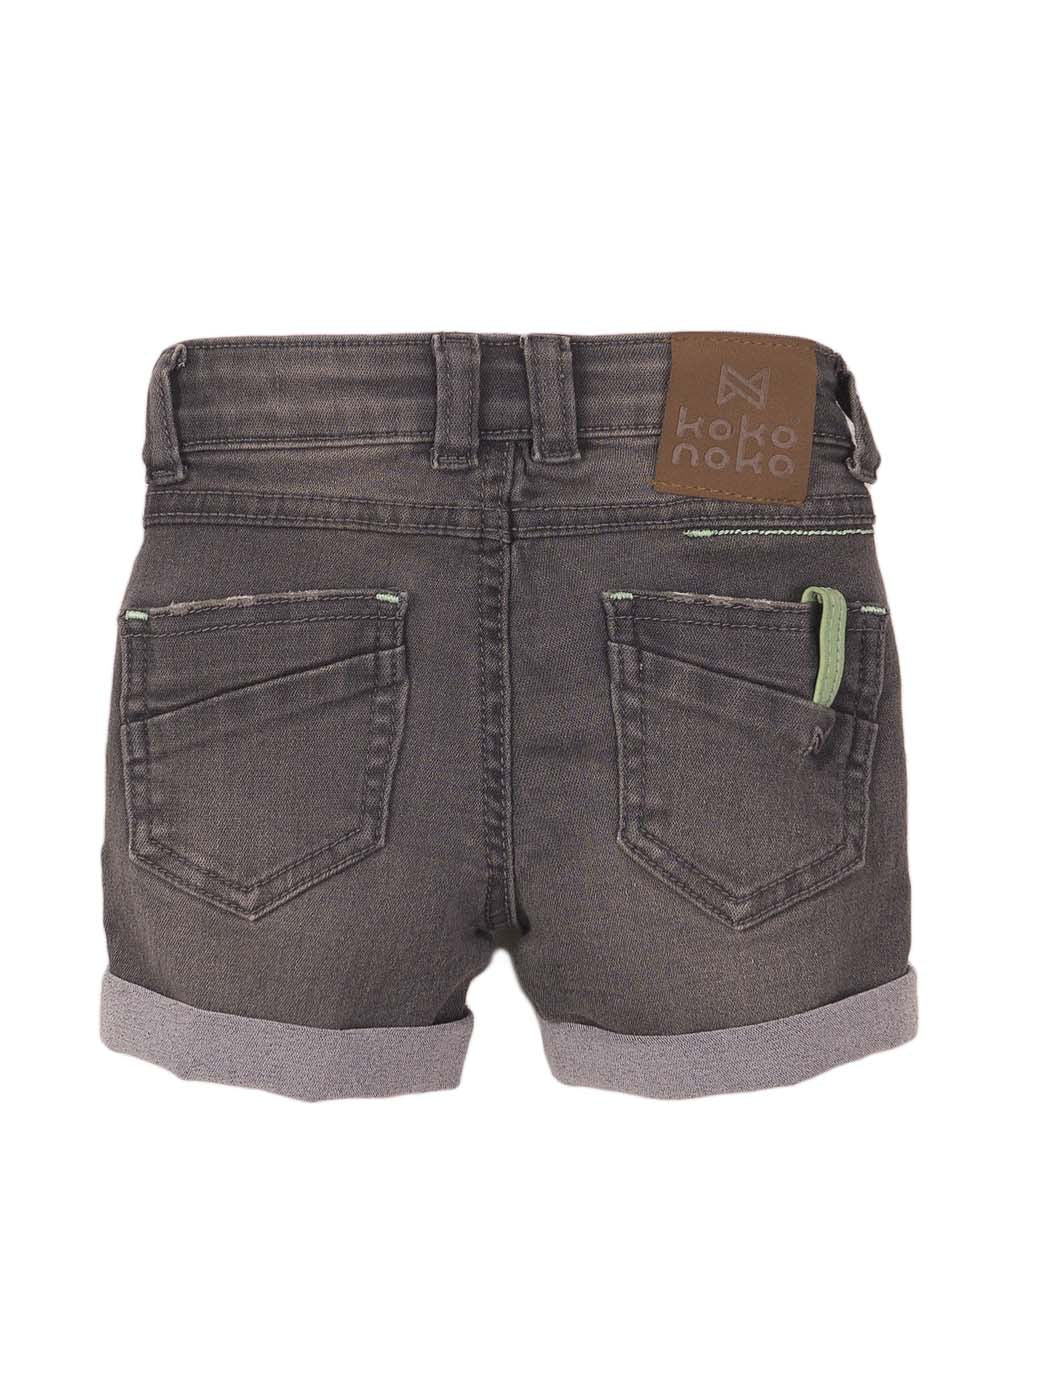 Boy's Jeans Shorts -  E38854-37 Grey